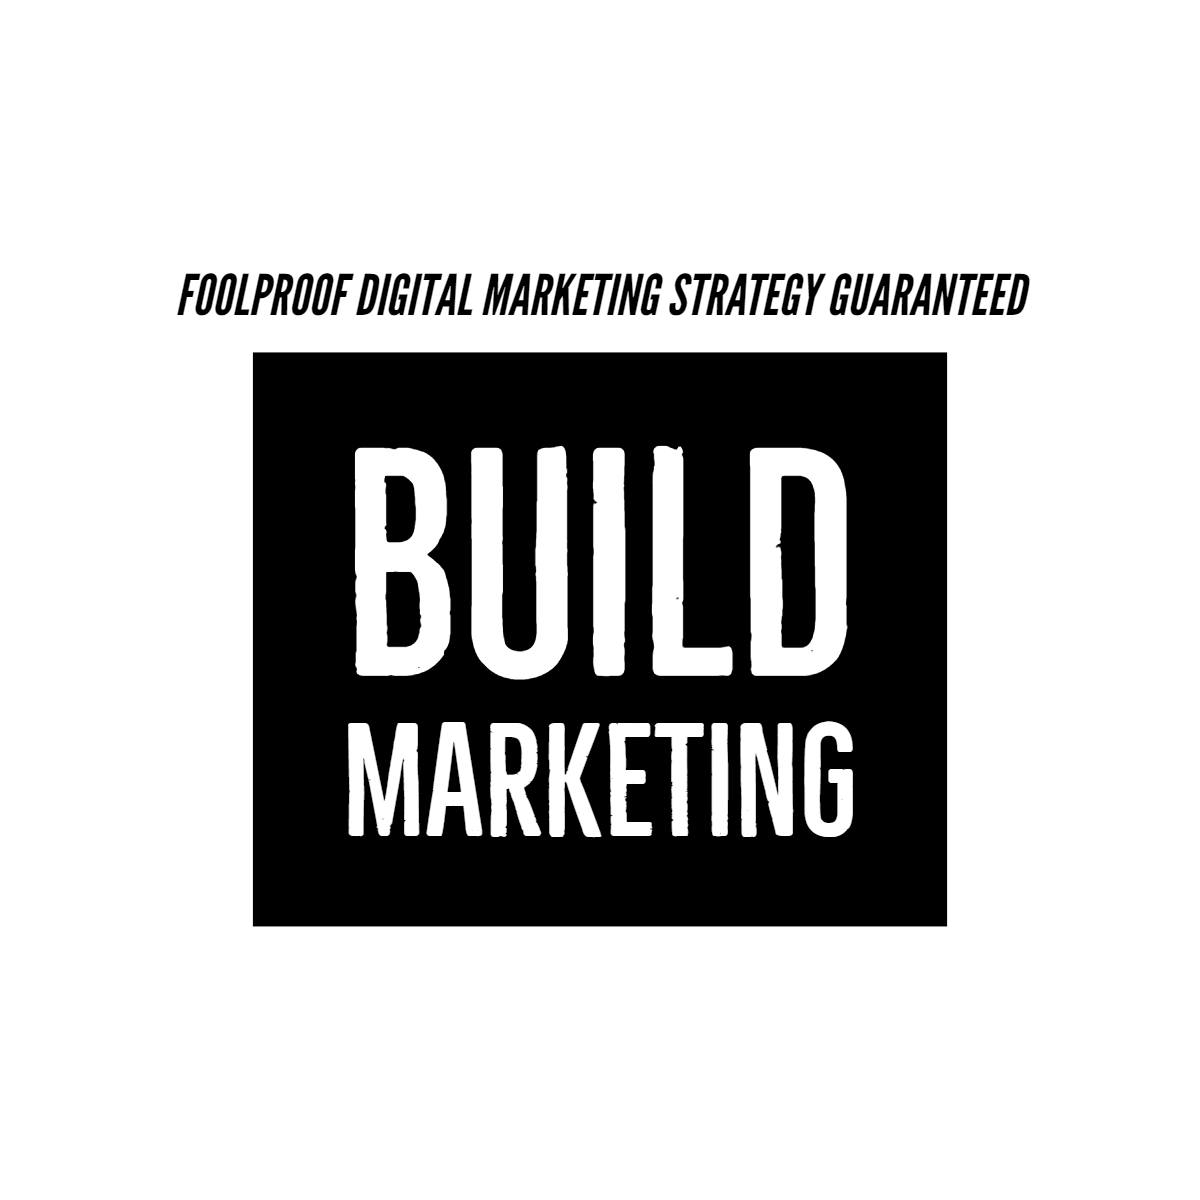 Build Marketing